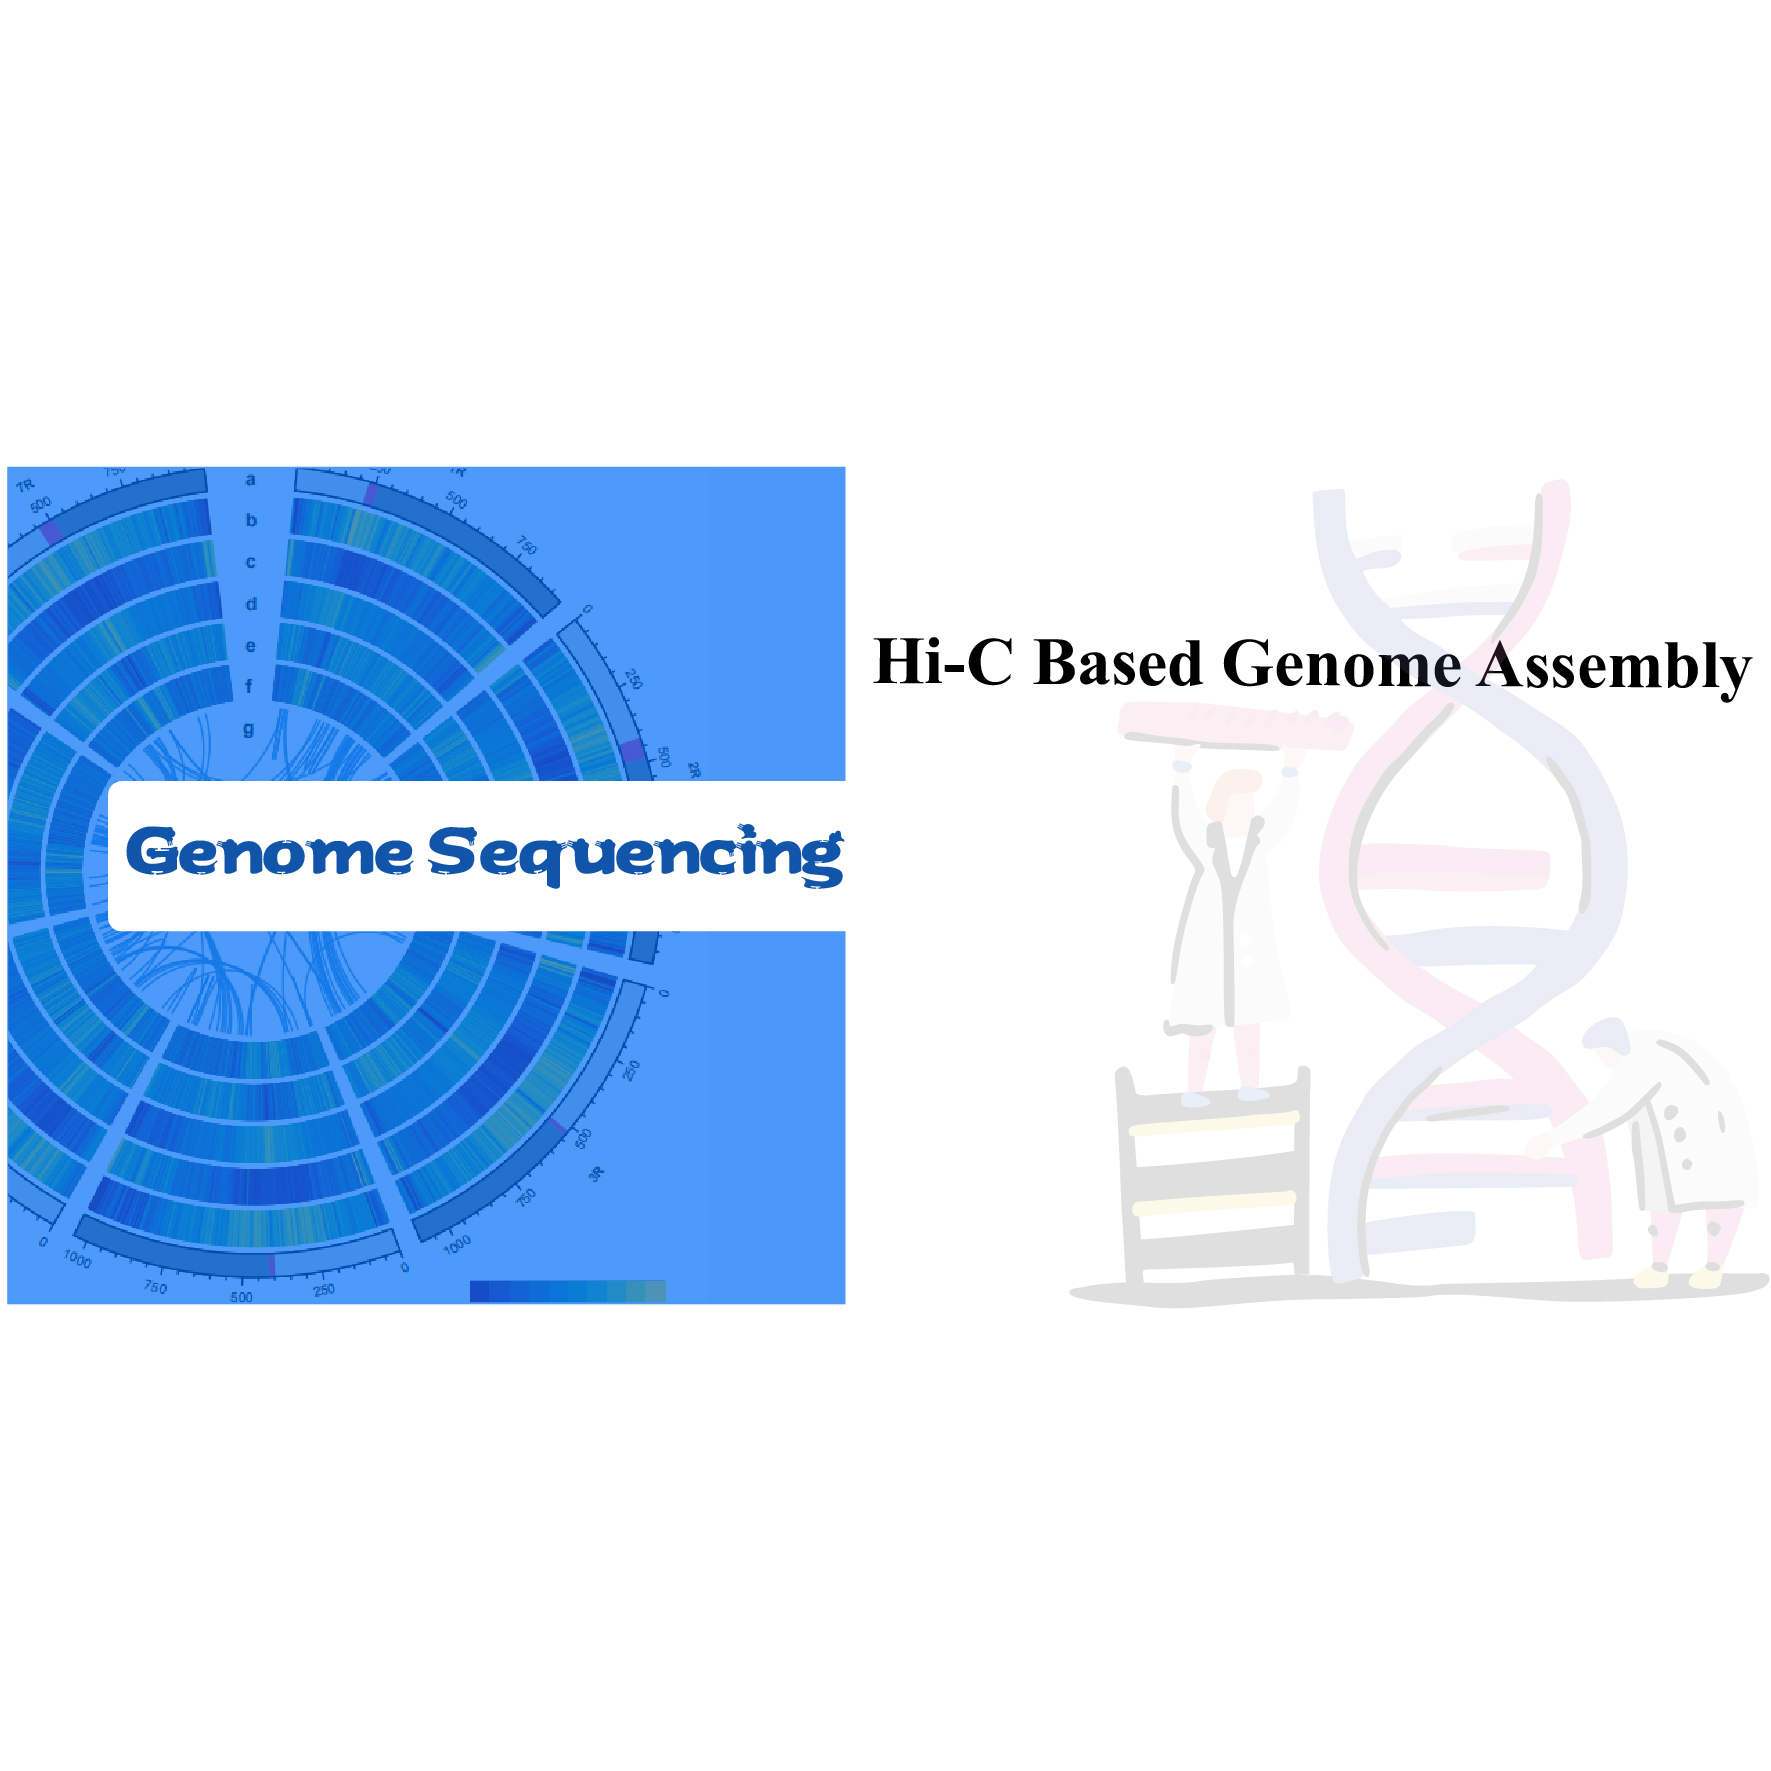 Hi-C based Genome Assembly